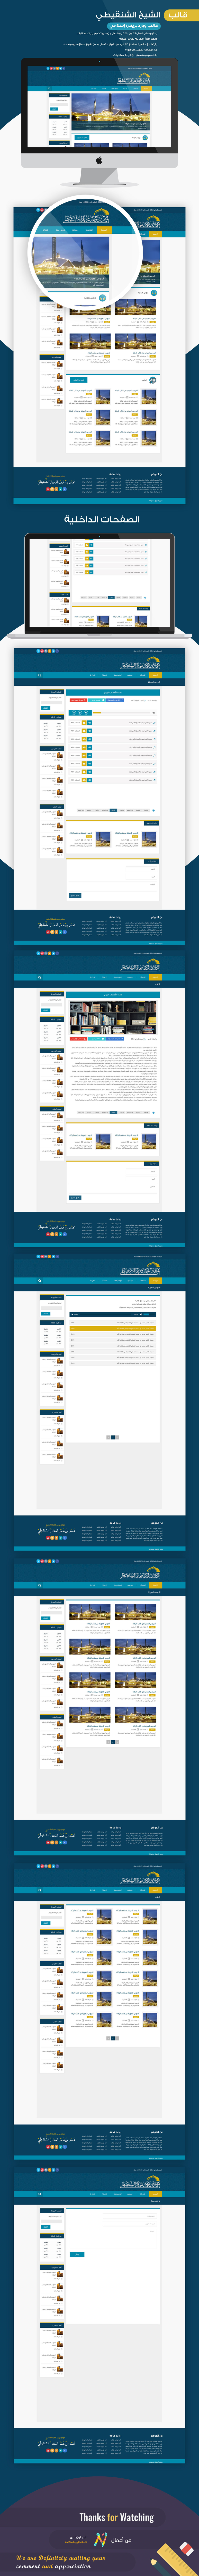 elnooronline wordpress Desgin corporate creative Multipurpose تصميم website template website themes Web Design 